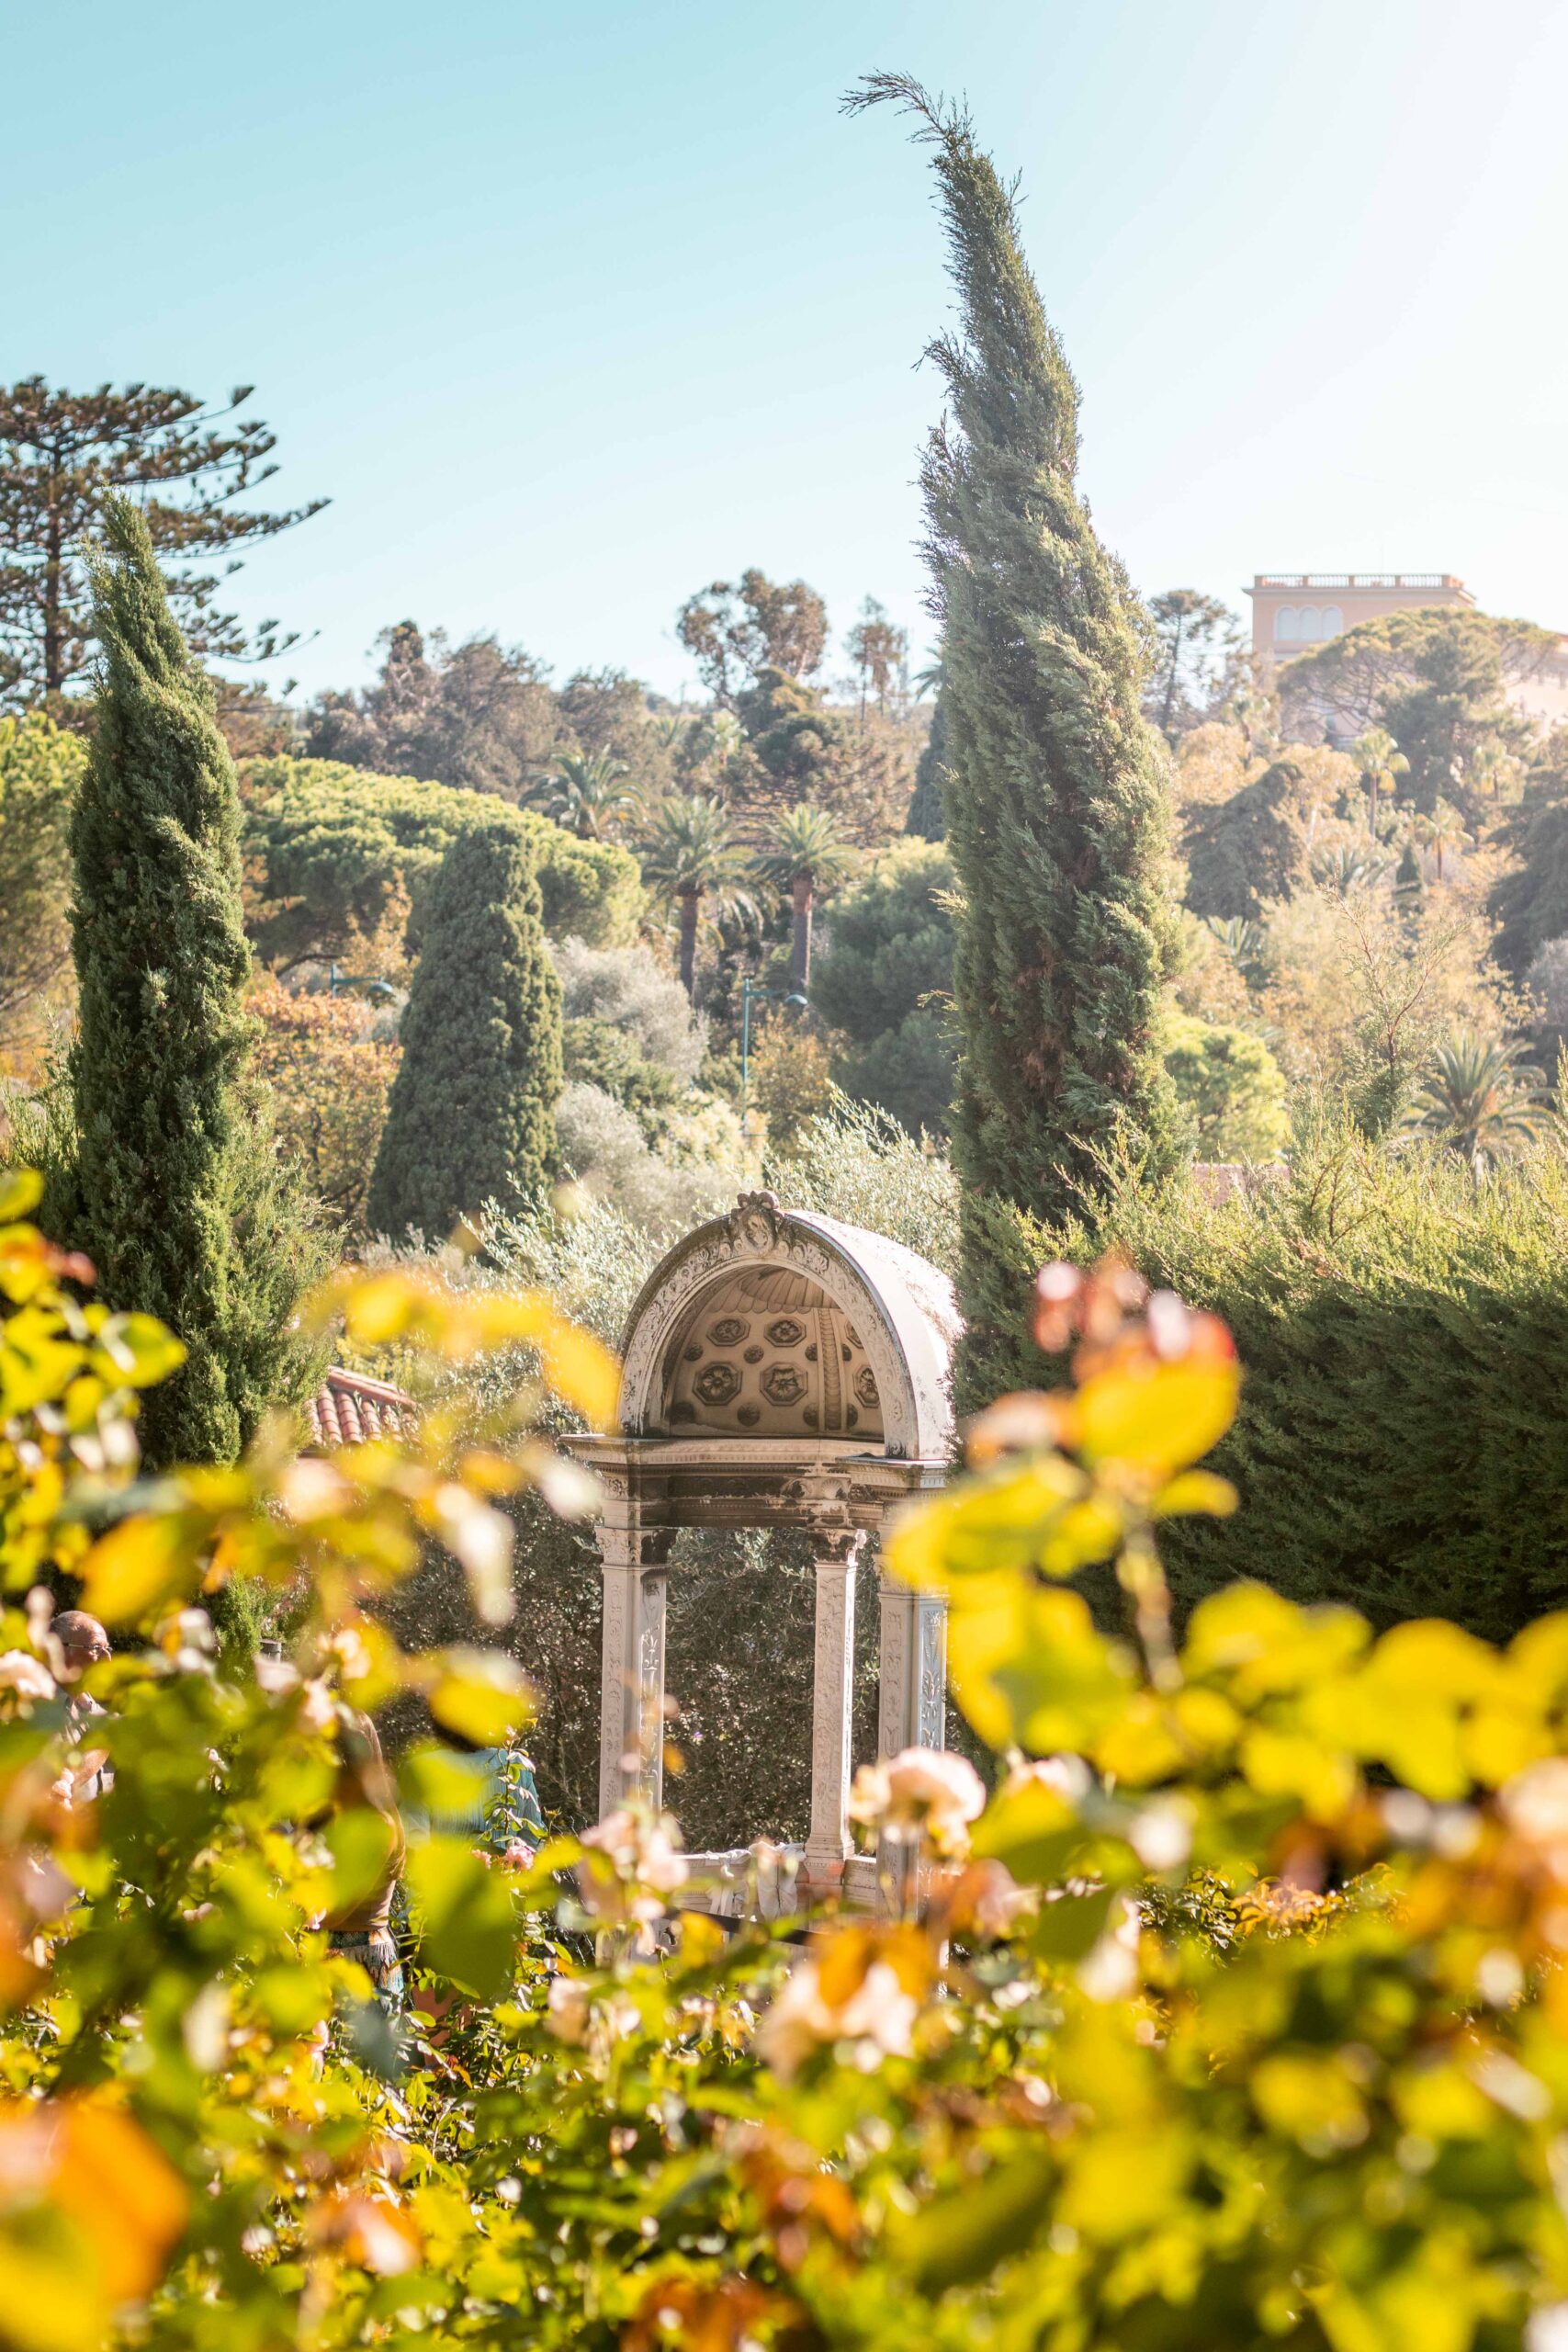 Decorative stone construction and flowers in the Rose Garden ("La Roseraie") of Villa Ephrussi de Rothschild in Saint-Jean-Cap-Ferrat, France